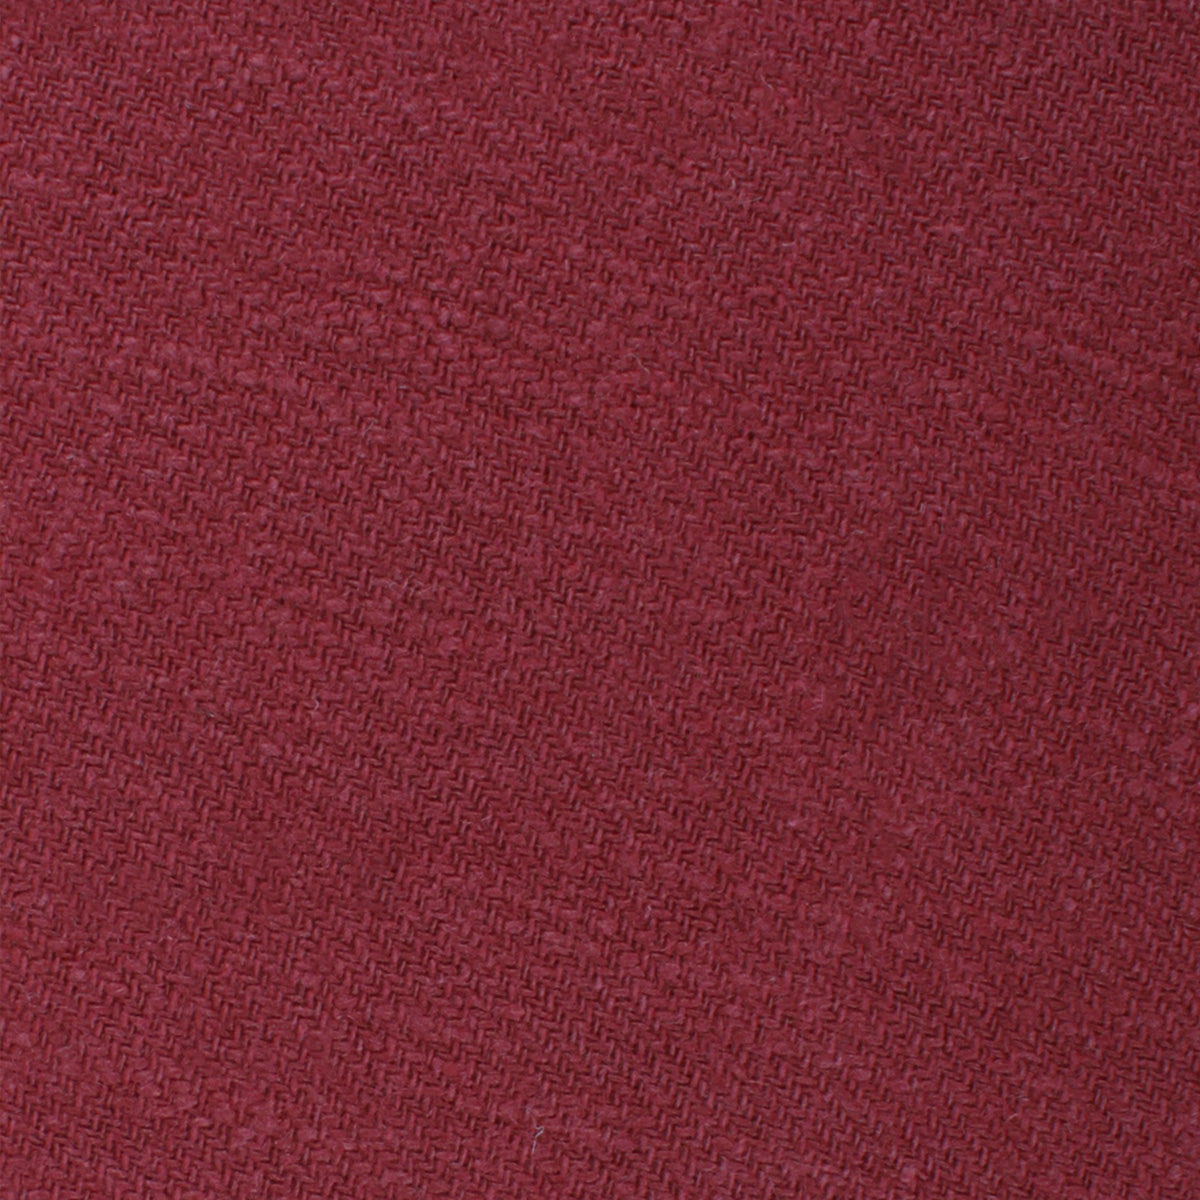 Cabernet Burgundy Linen Pocket Square Fabric